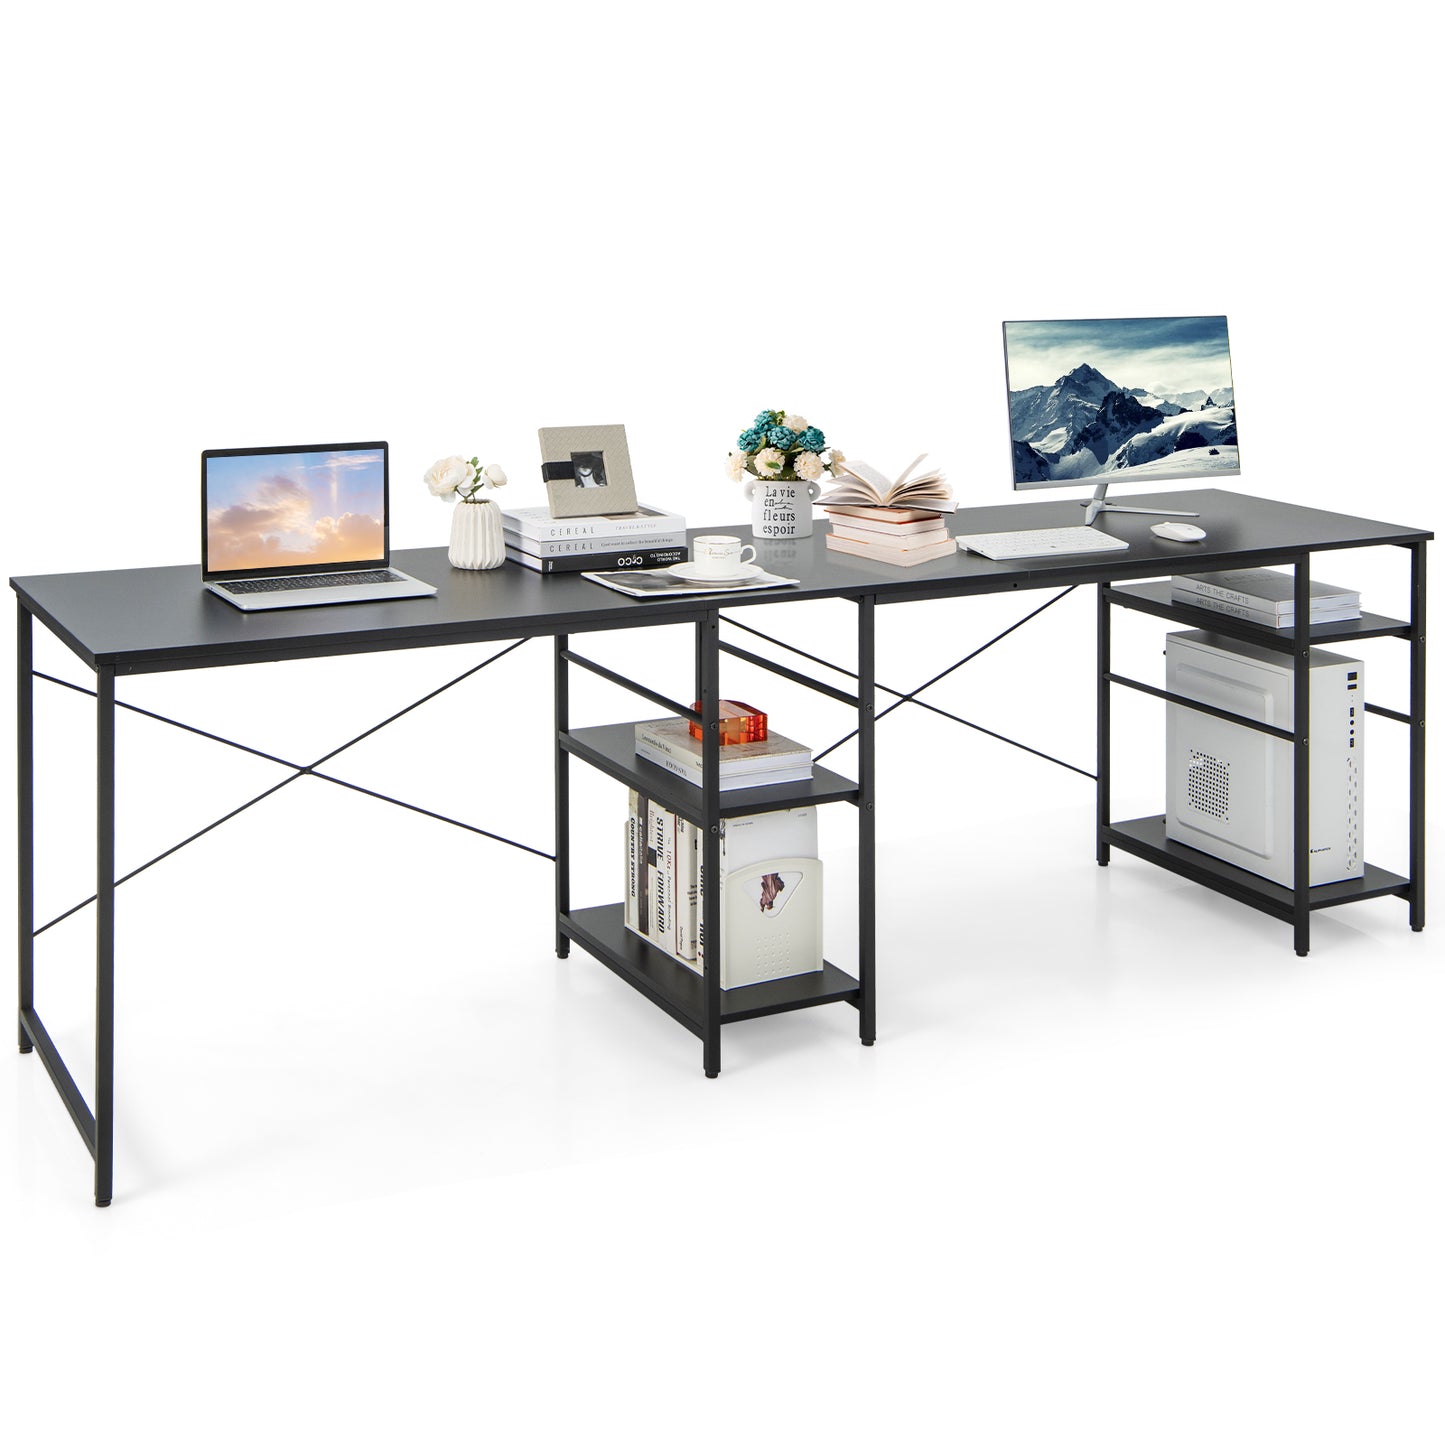 Wooden Industrial L-Shaped Desk with Storage Shelves-Black